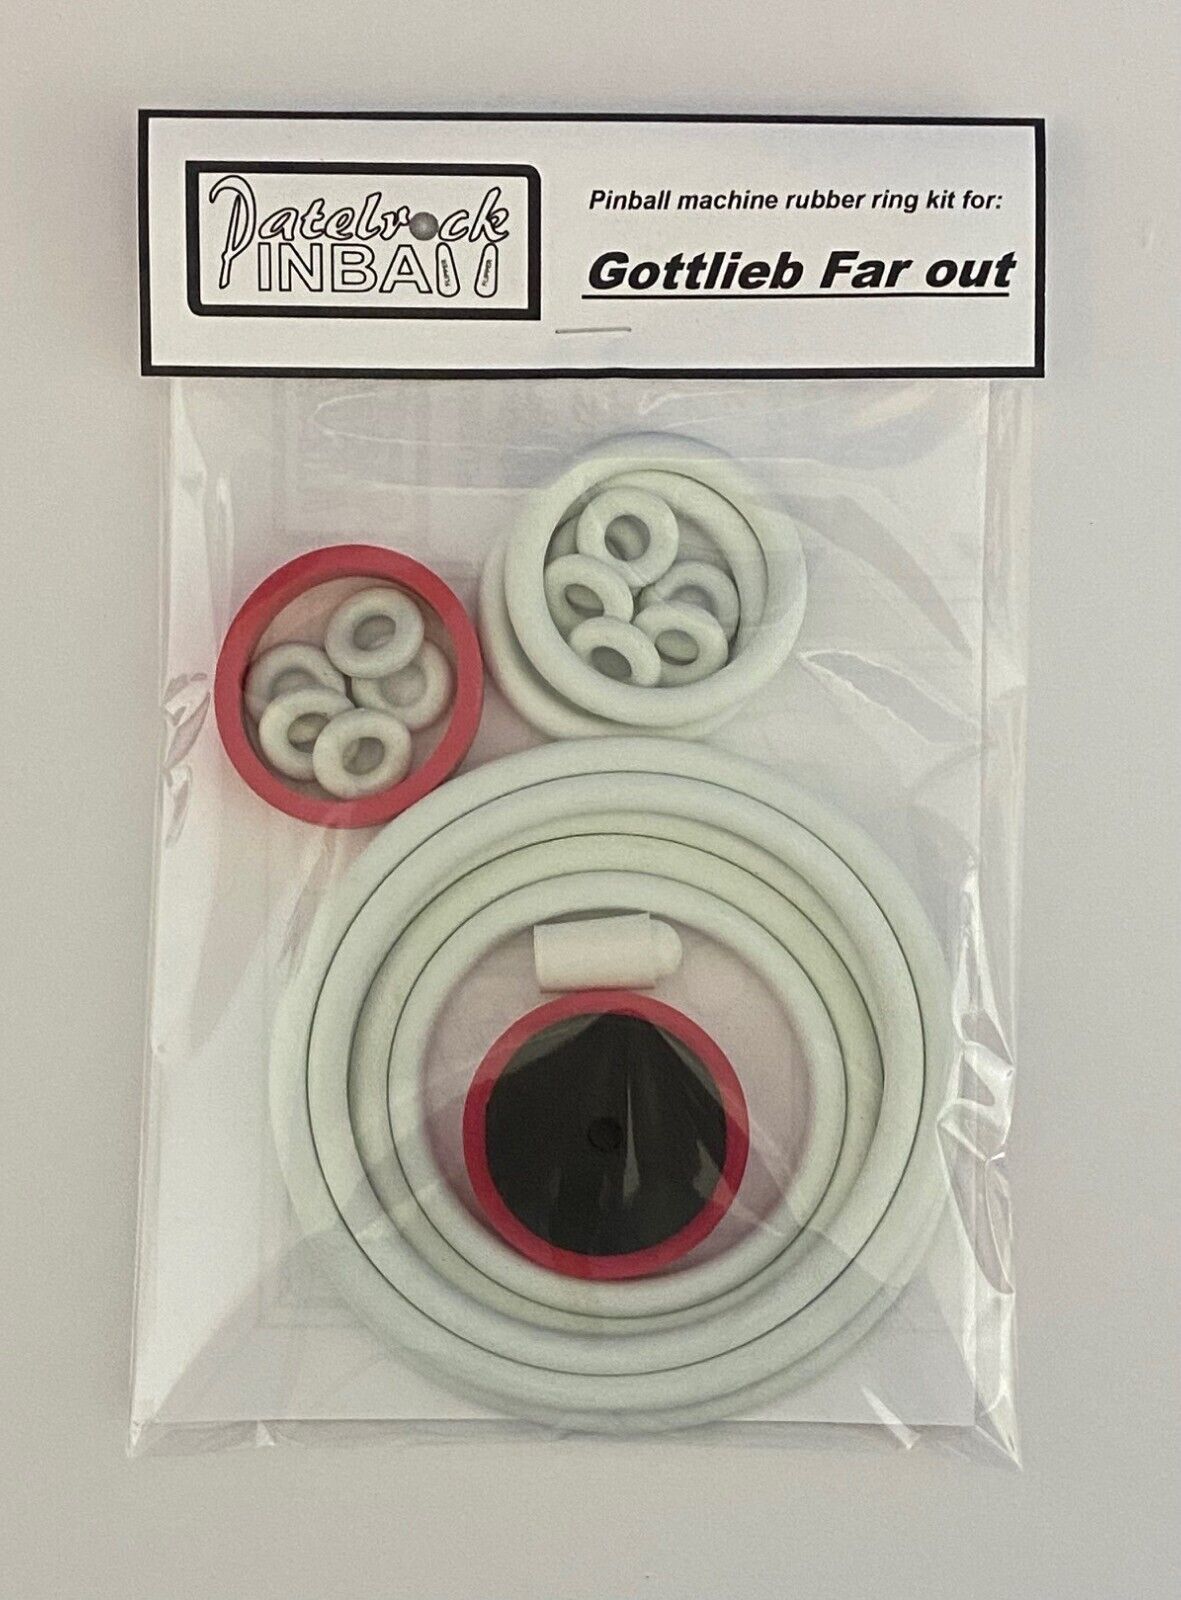 1974 Gottlieb Far Out Pinball Machine Rubber Ring Kit